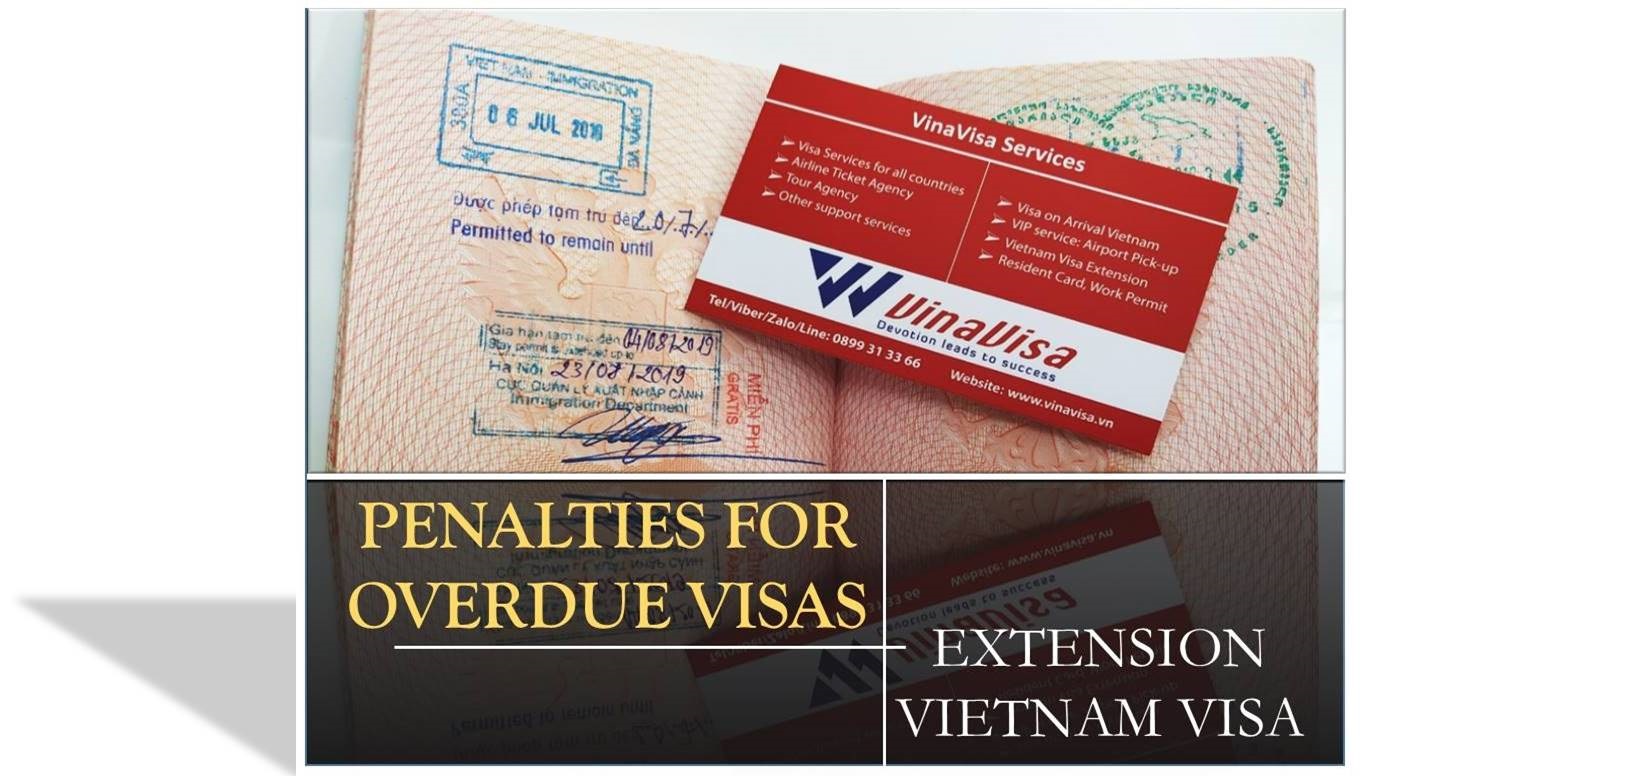 PENALTIES FOR OVERDUE VISAS – EXTENDING VIETNAM VISA